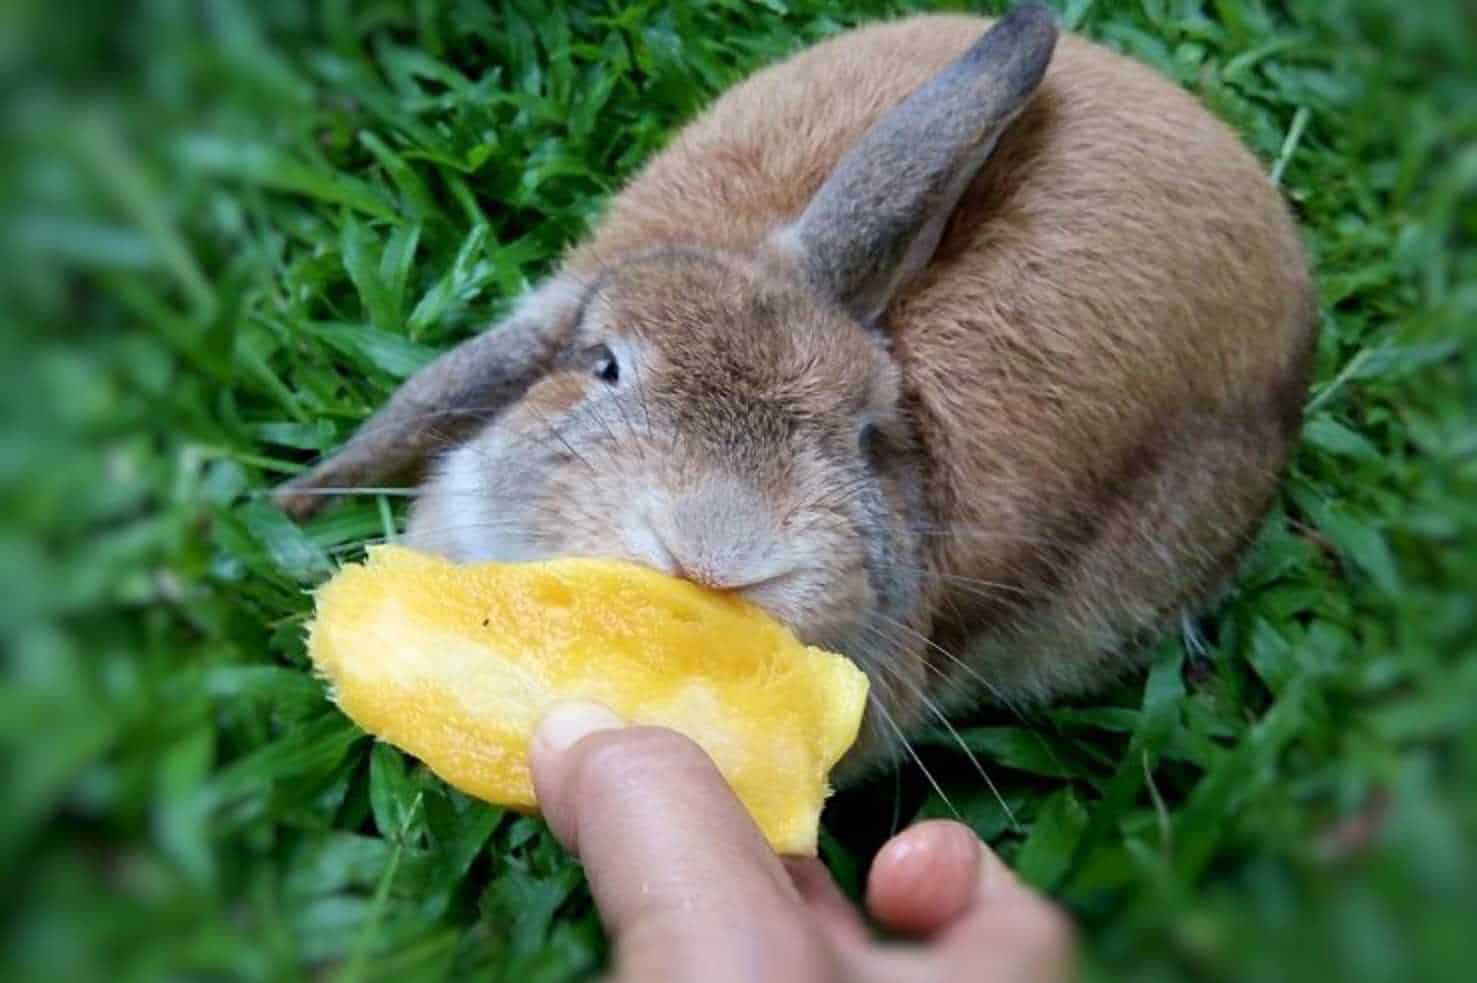 can rabbits eat mango